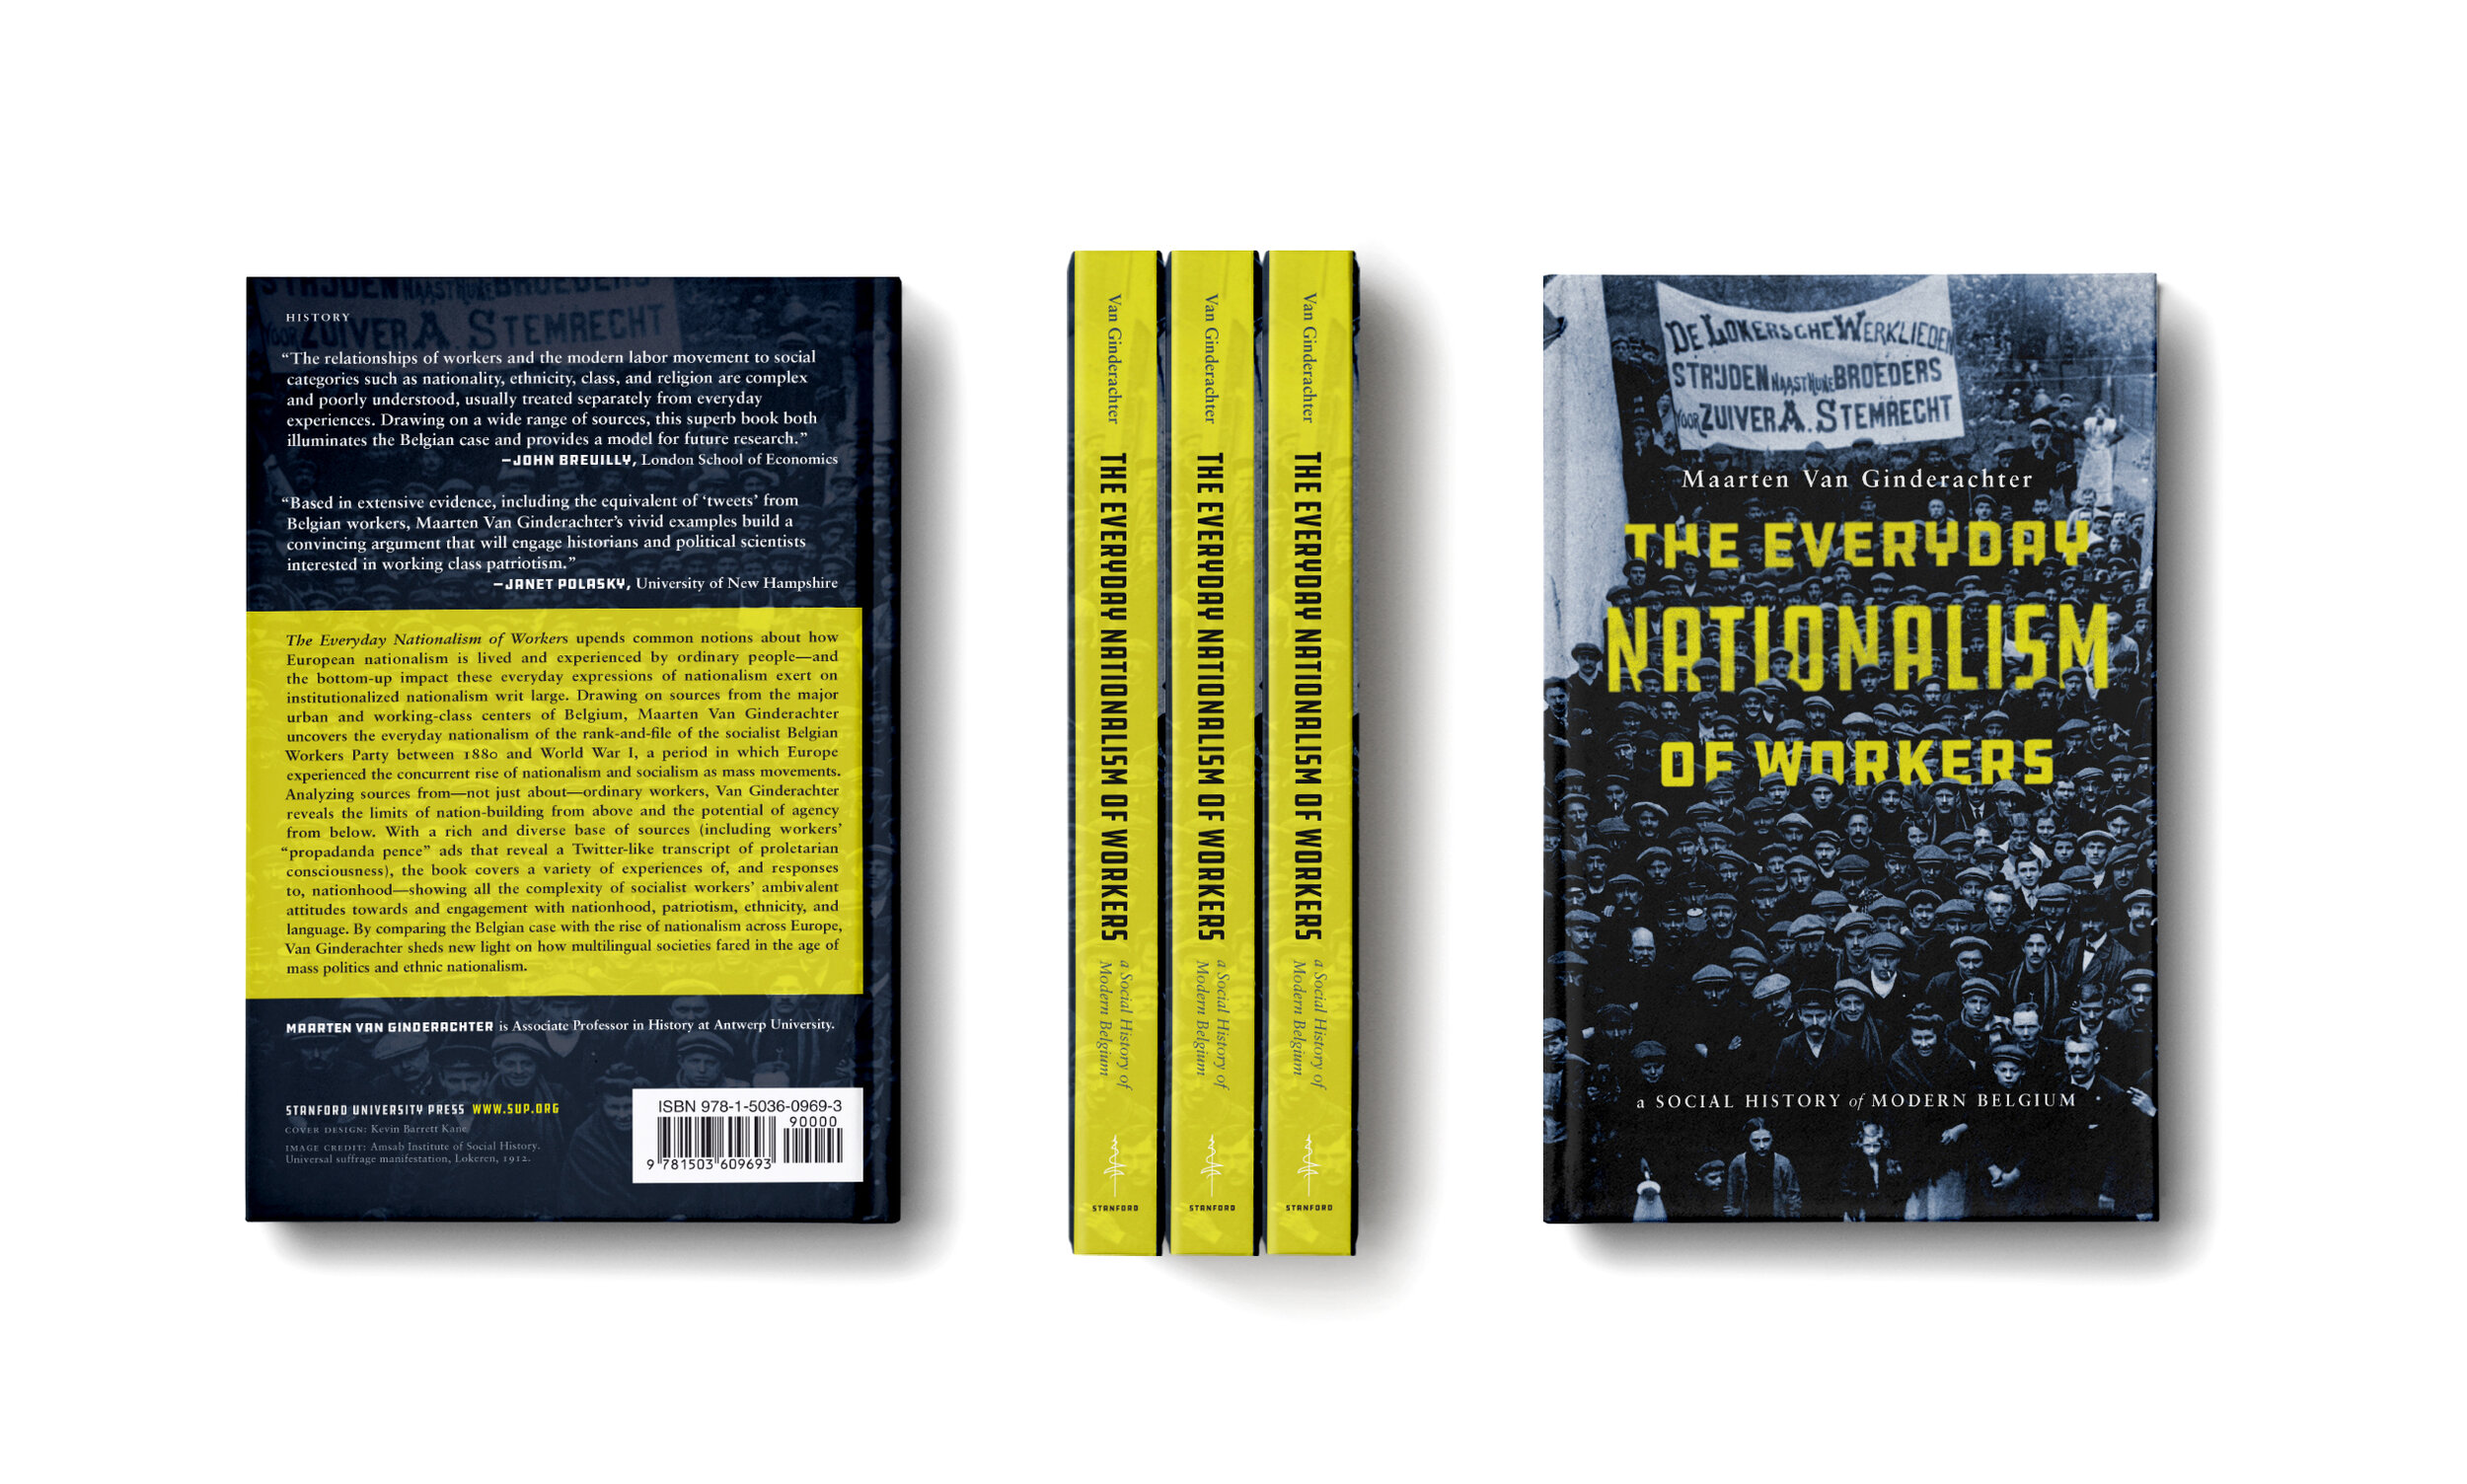 The Everyday Nationalism of Workers, by Maarten Van Ginderachter (Stanford, 2019)